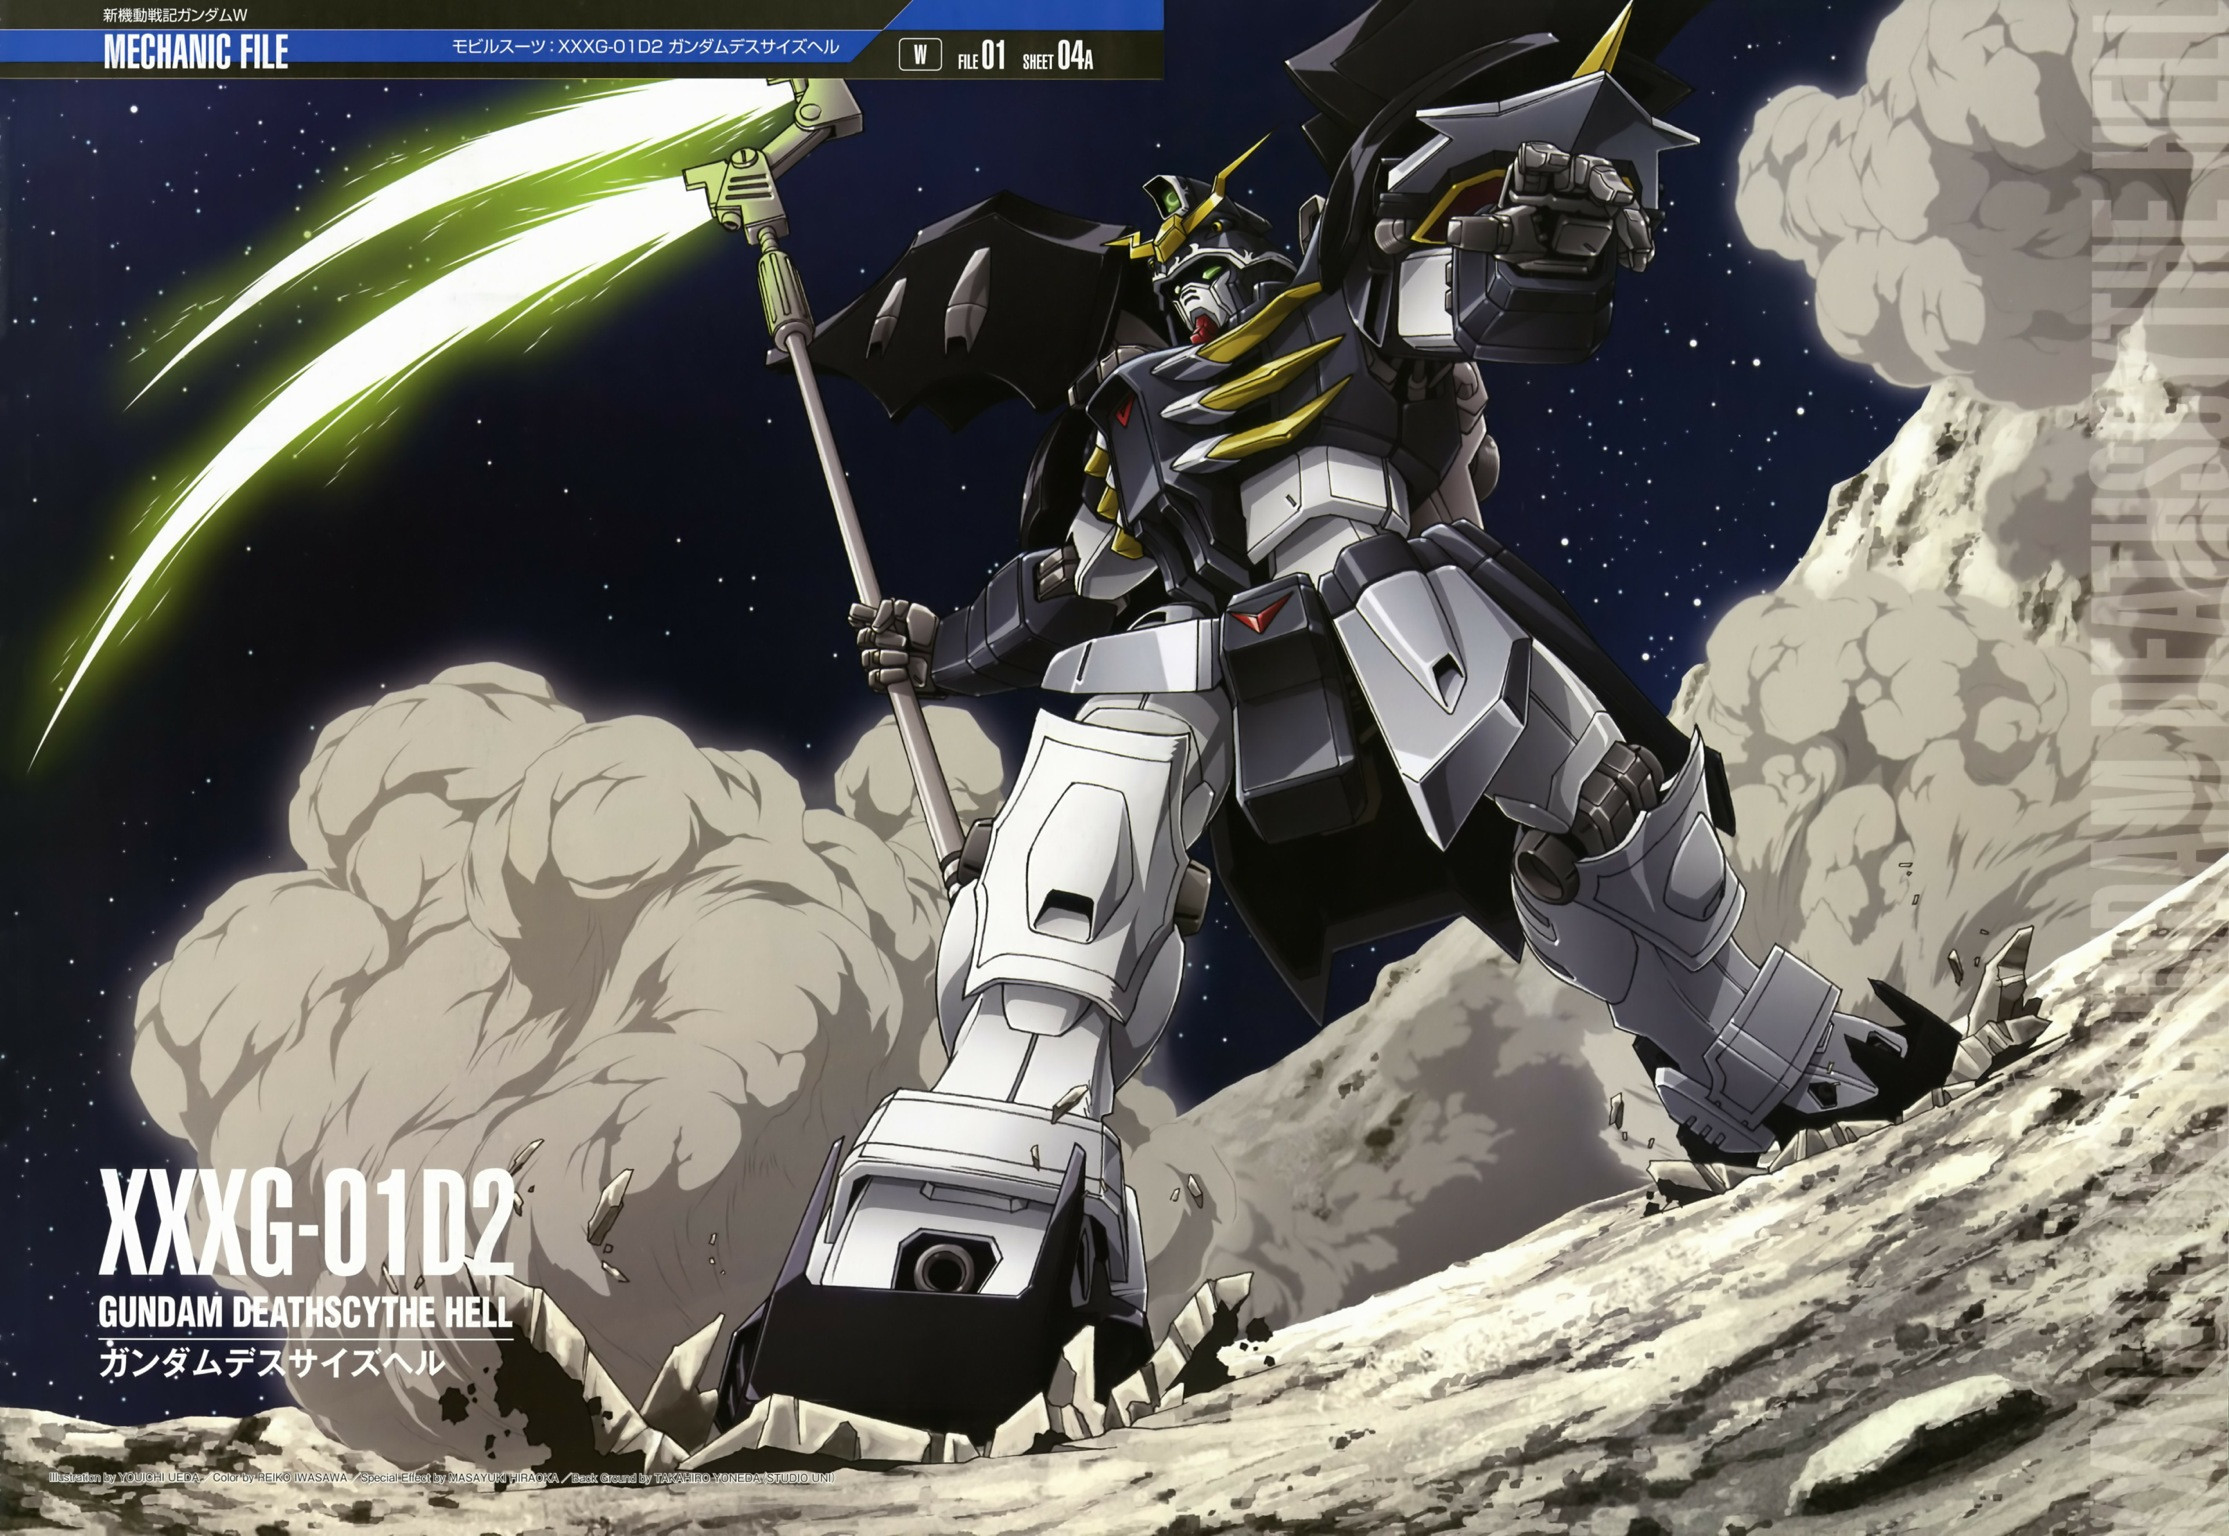 Gundam Deathscythe sketch | Gundam Wing – The Gundams | Pinterest |  Sketches and Gundam